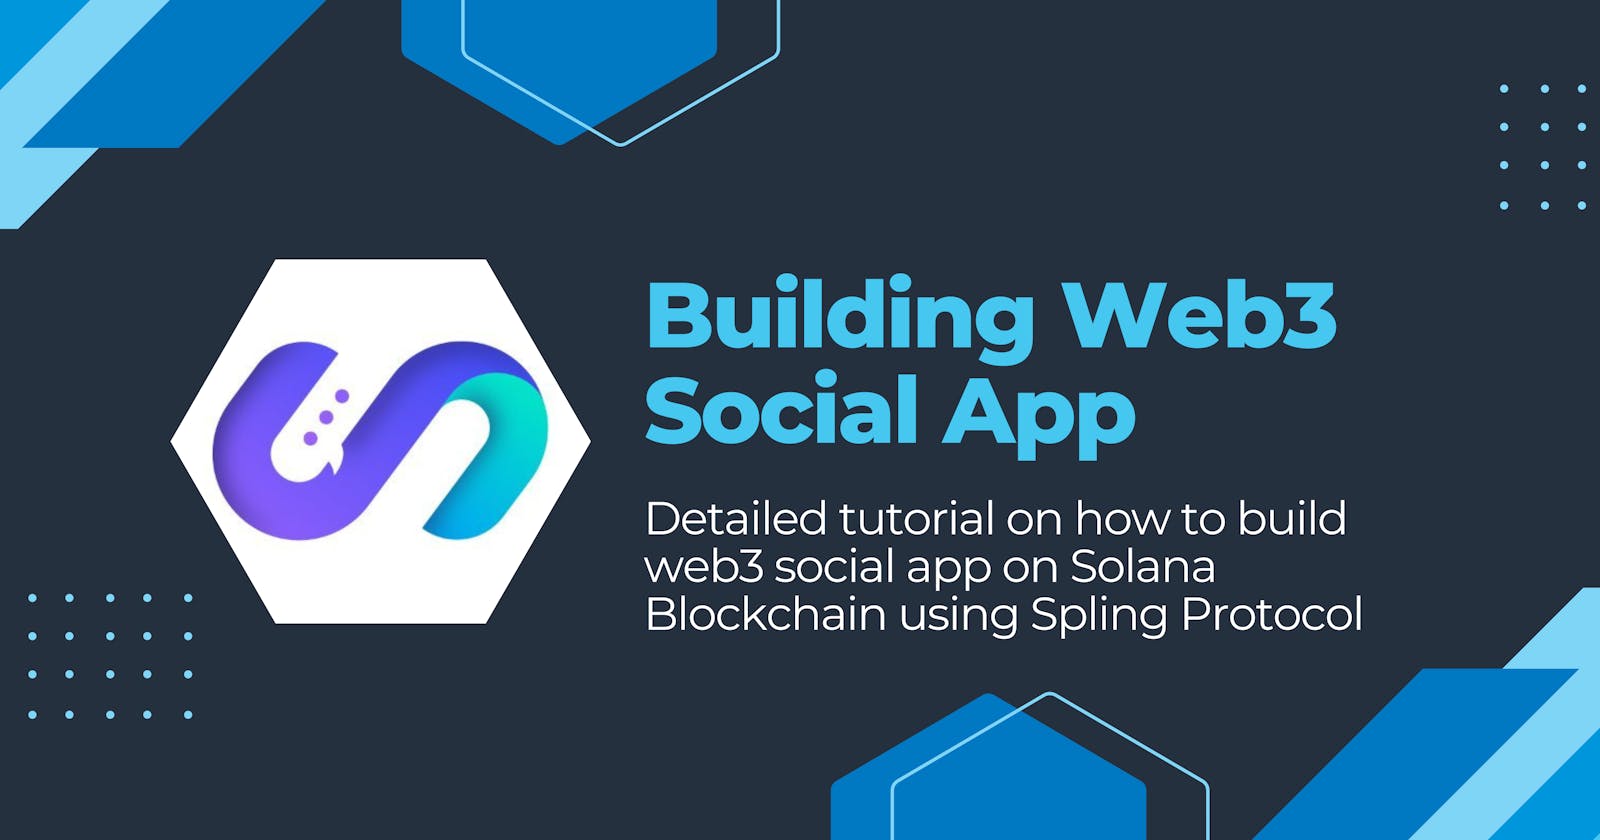 Building web3 social app on Solana